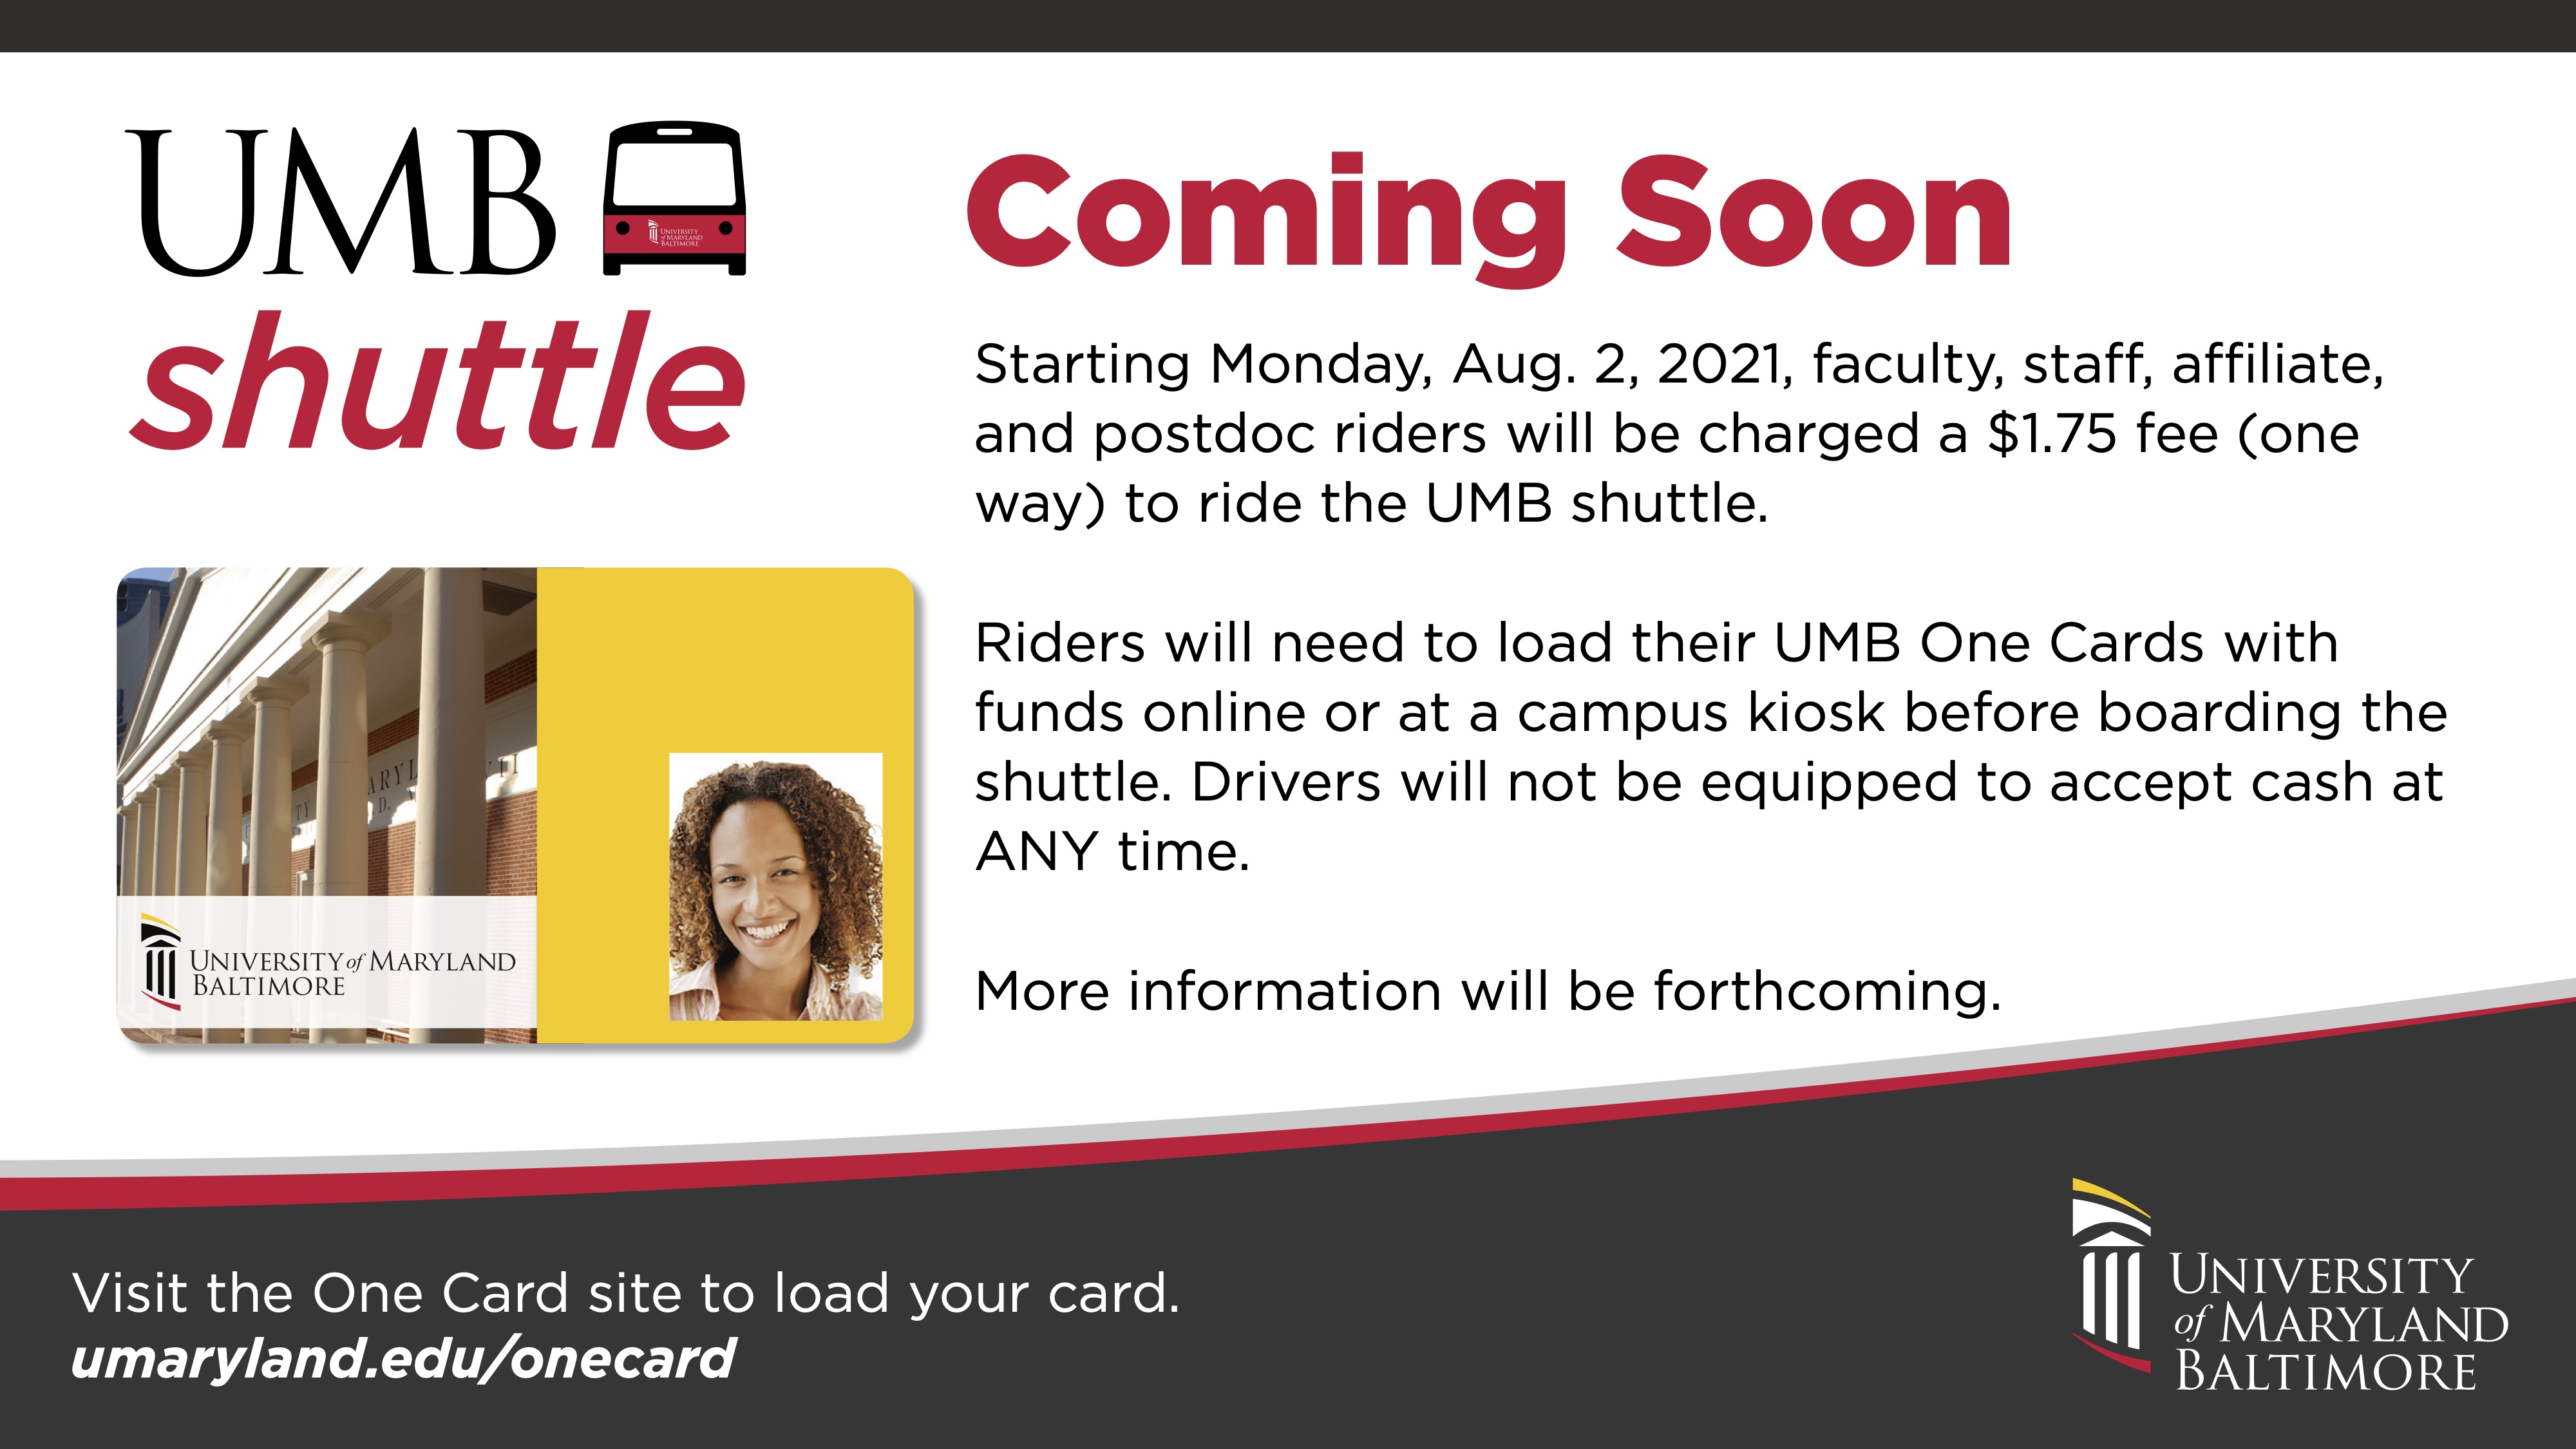 UMB shuttle fee change coming soon